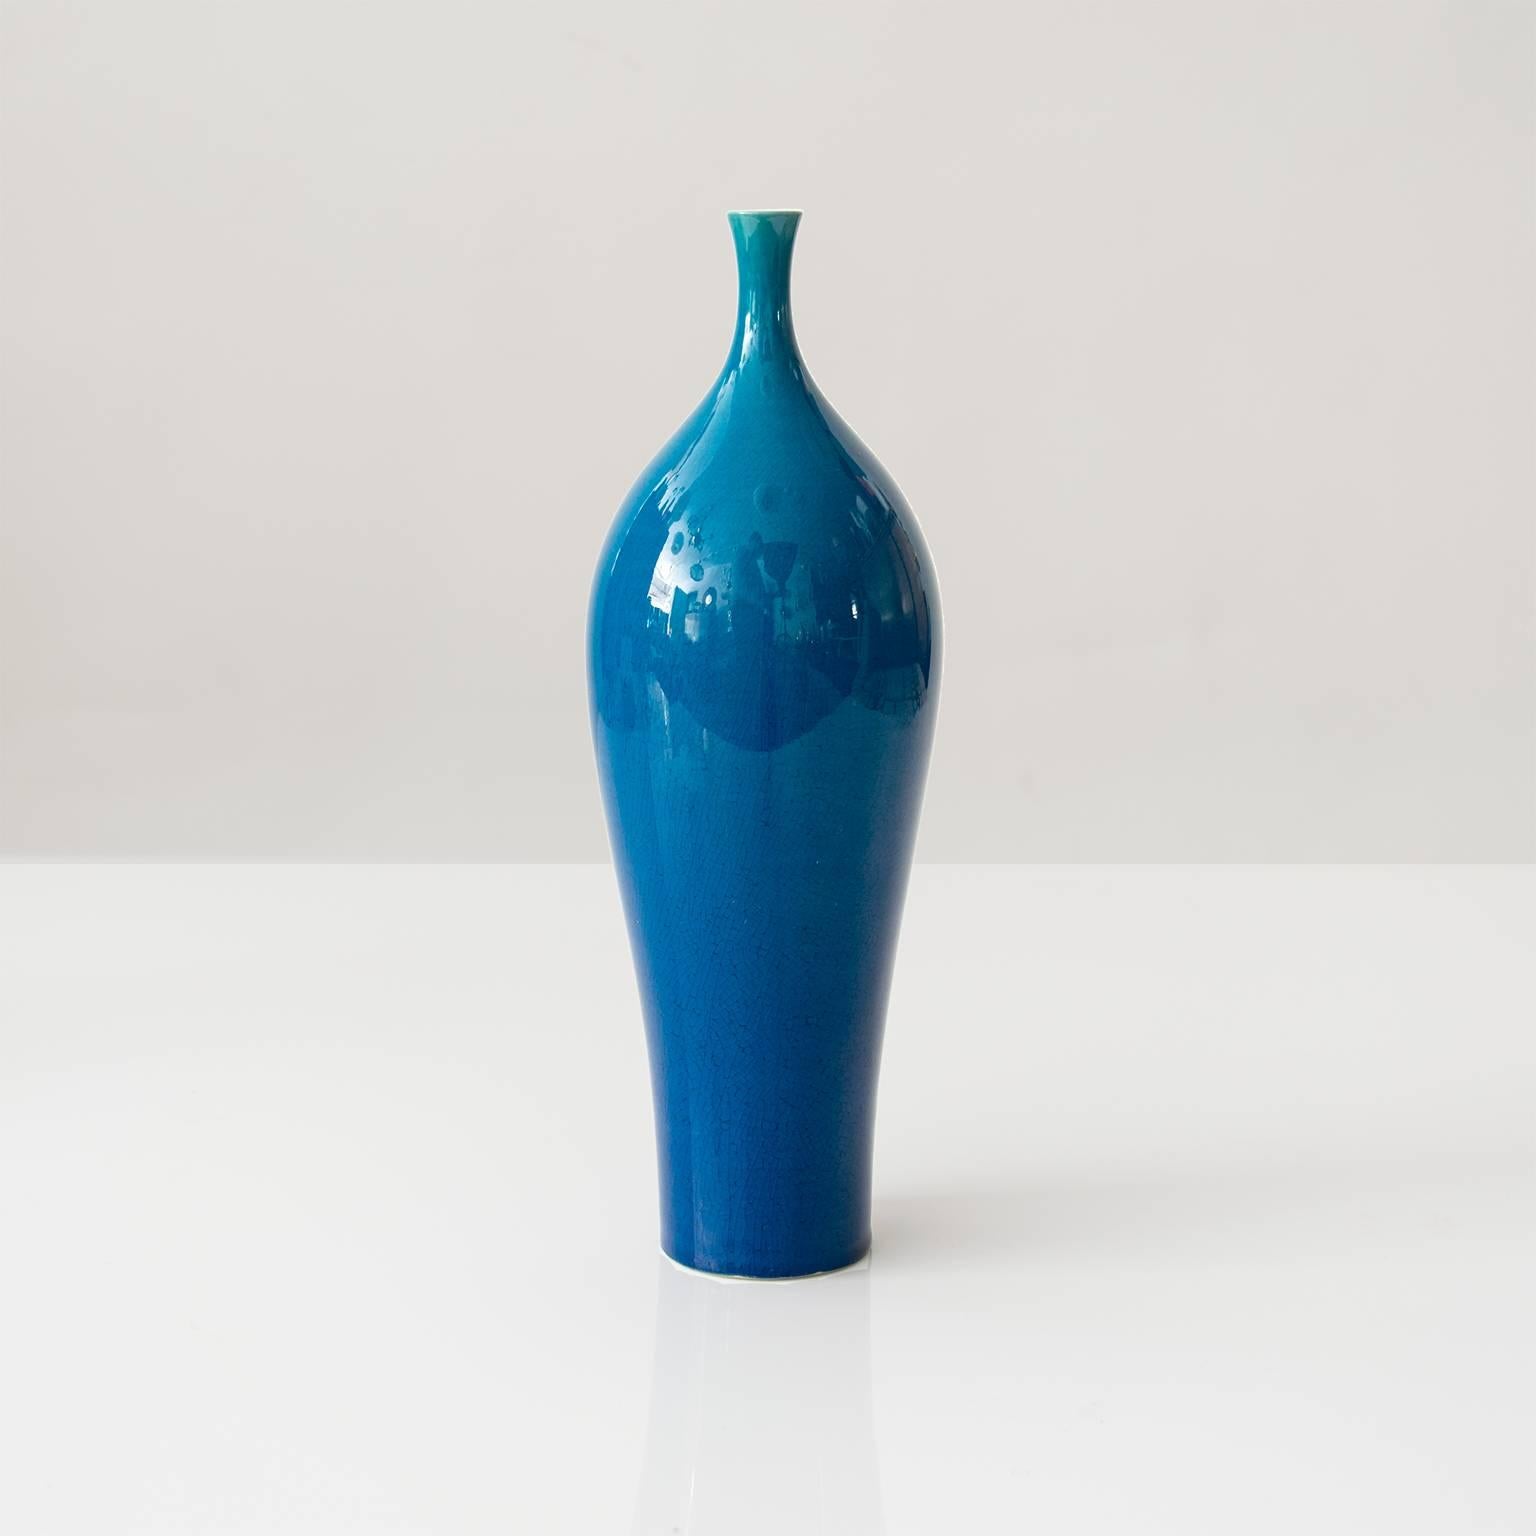 Scandinavian Modern Blue glazed vase by Swedish ceramicist Carl-Harry Stålhane, from Rörstrand. Signed on the bottom "CHS." 

Measures: Diameter 2.75, height 9".